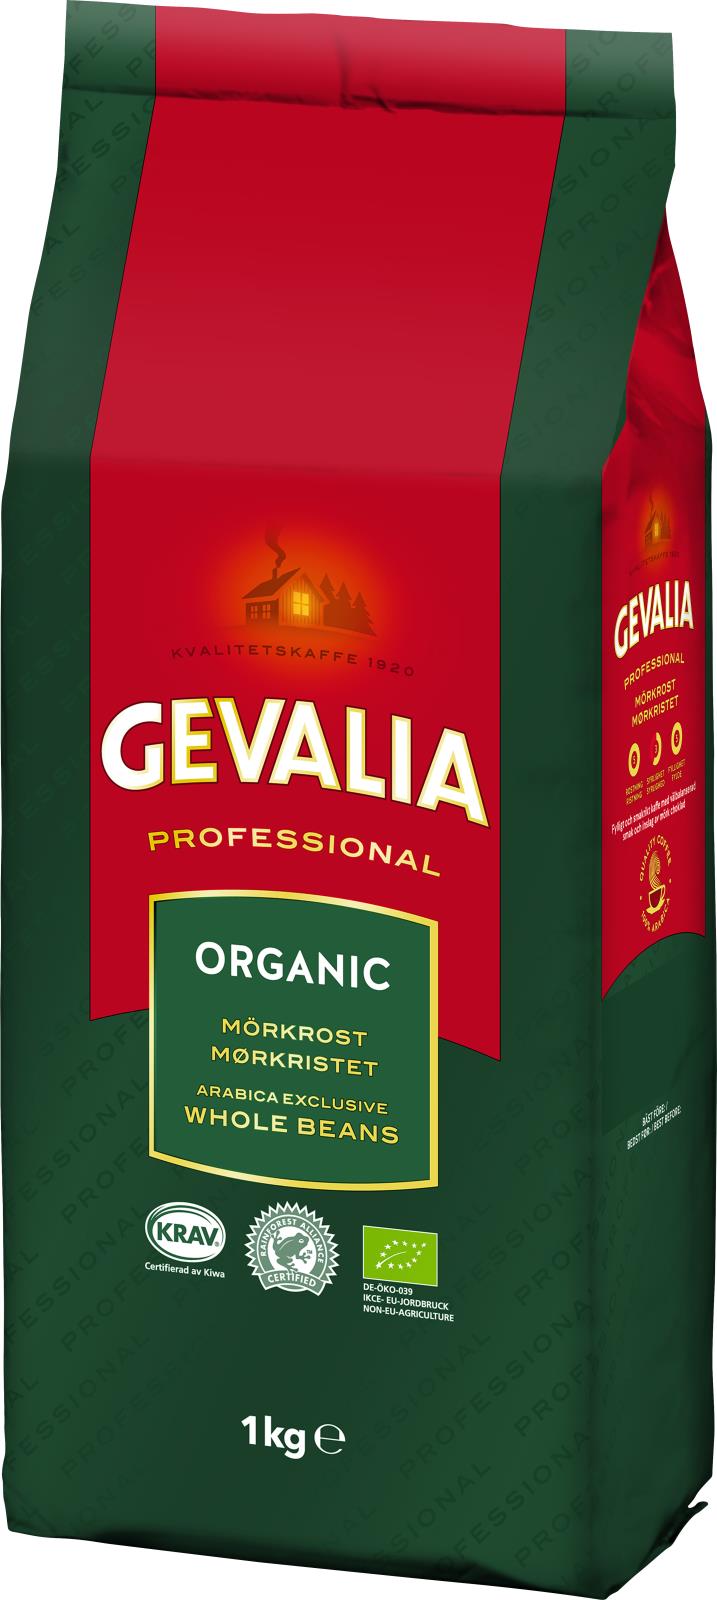 Kaffe Gevalia Organic Mörk hela bönor 1000g